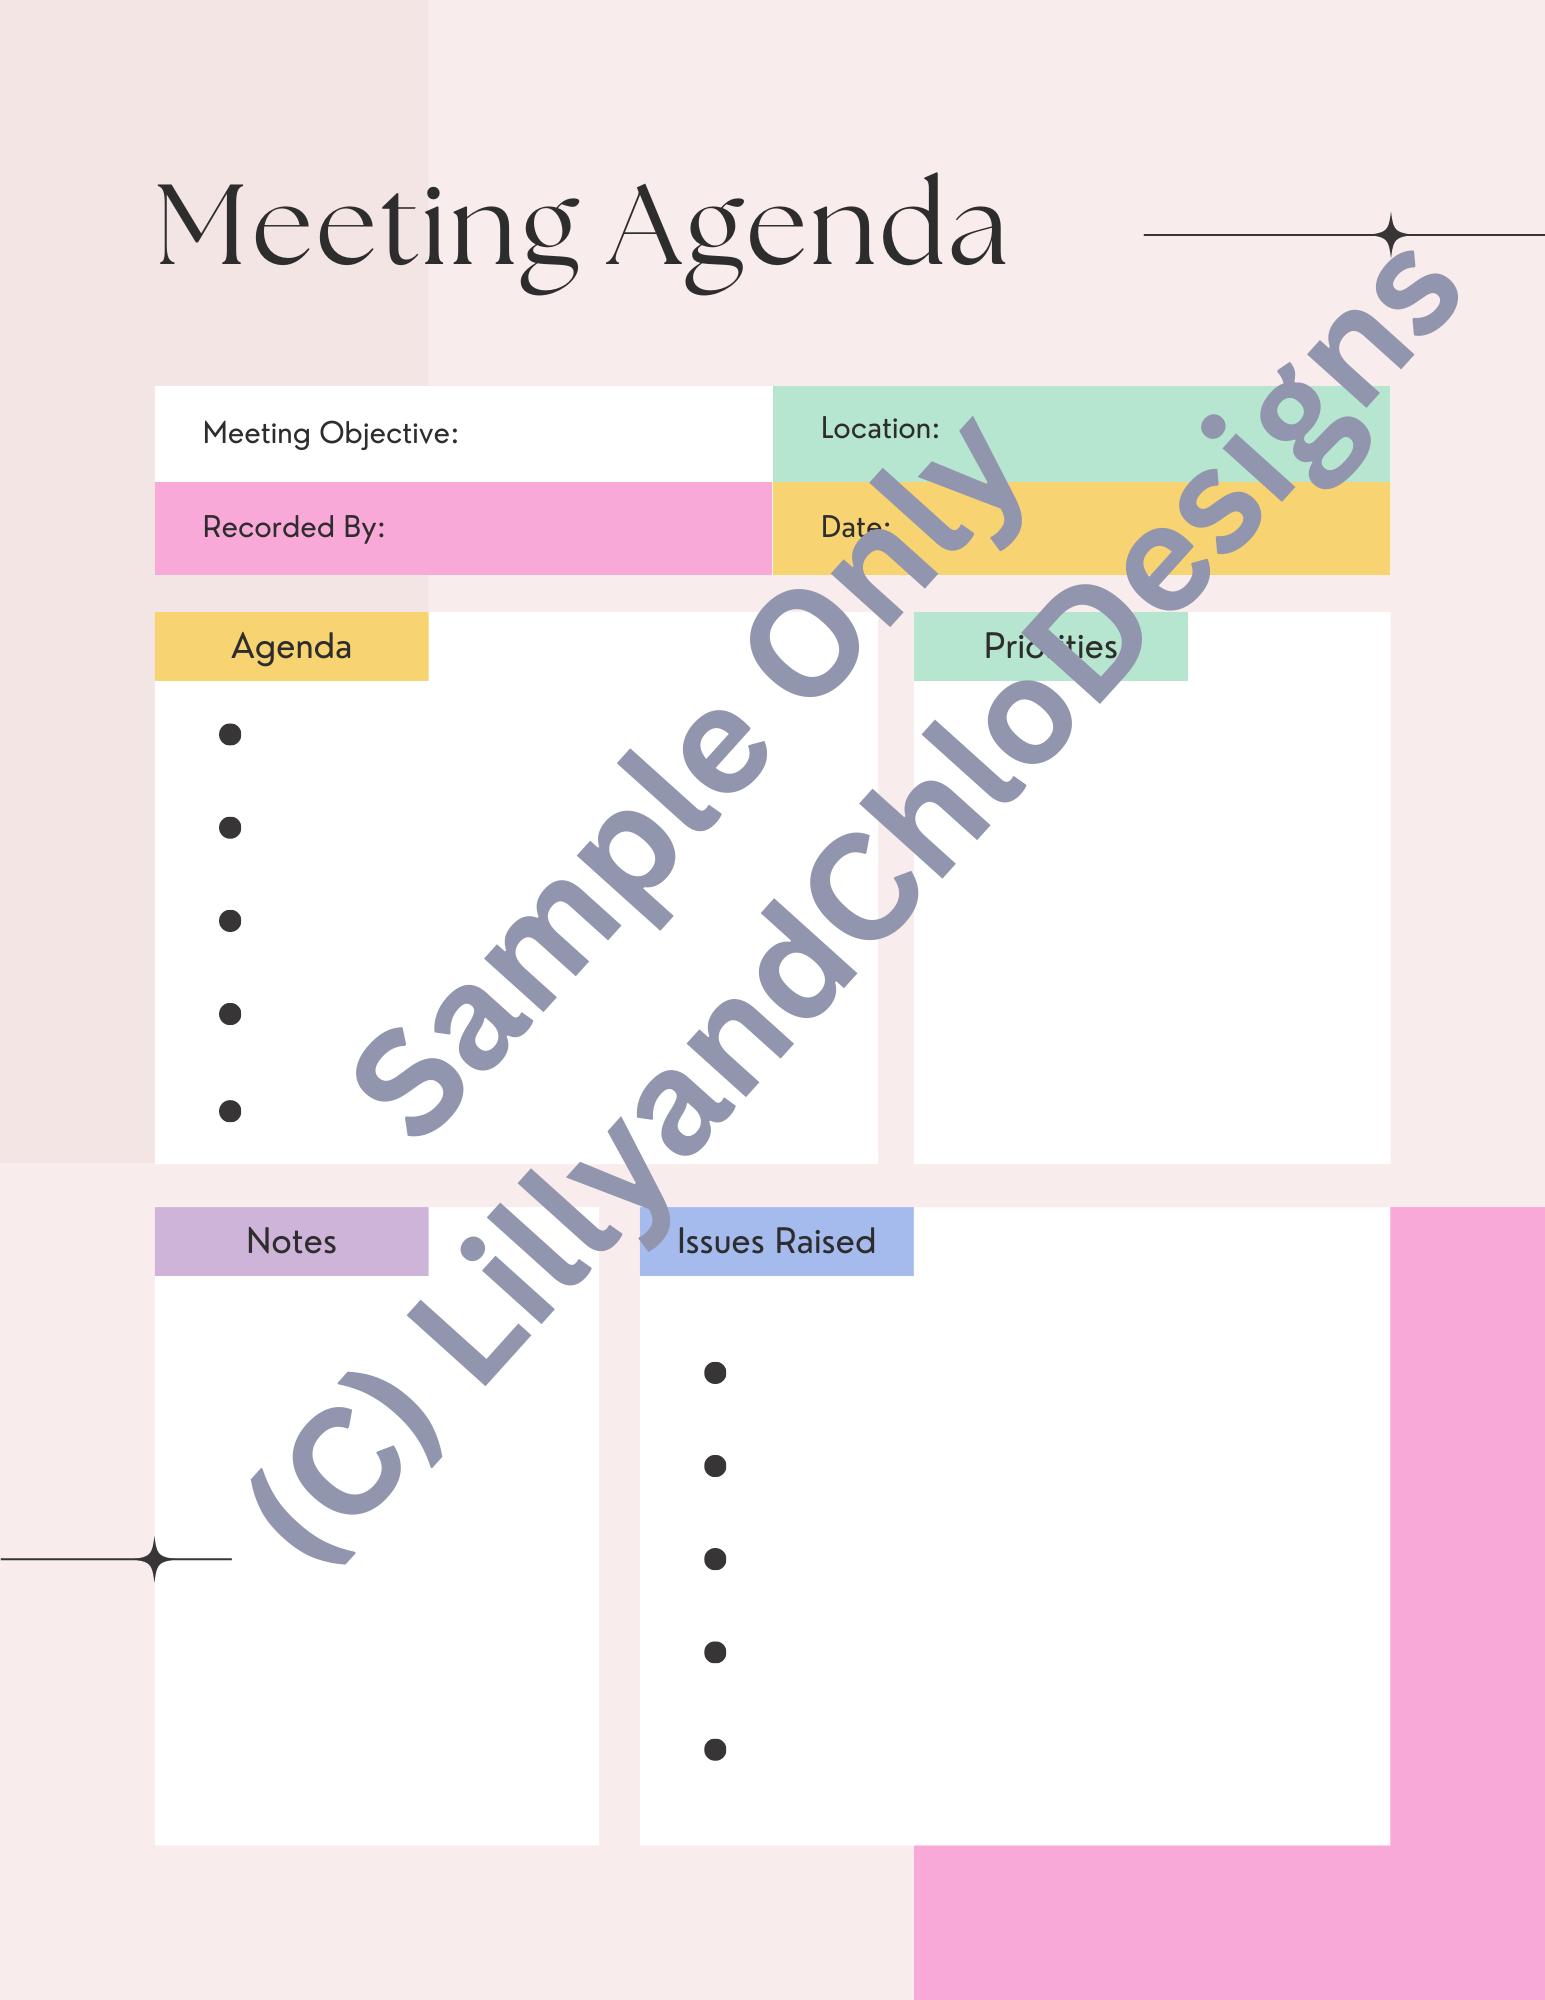 Meeting Notes Template, Printable Meeting Agenda PDF, Meeting